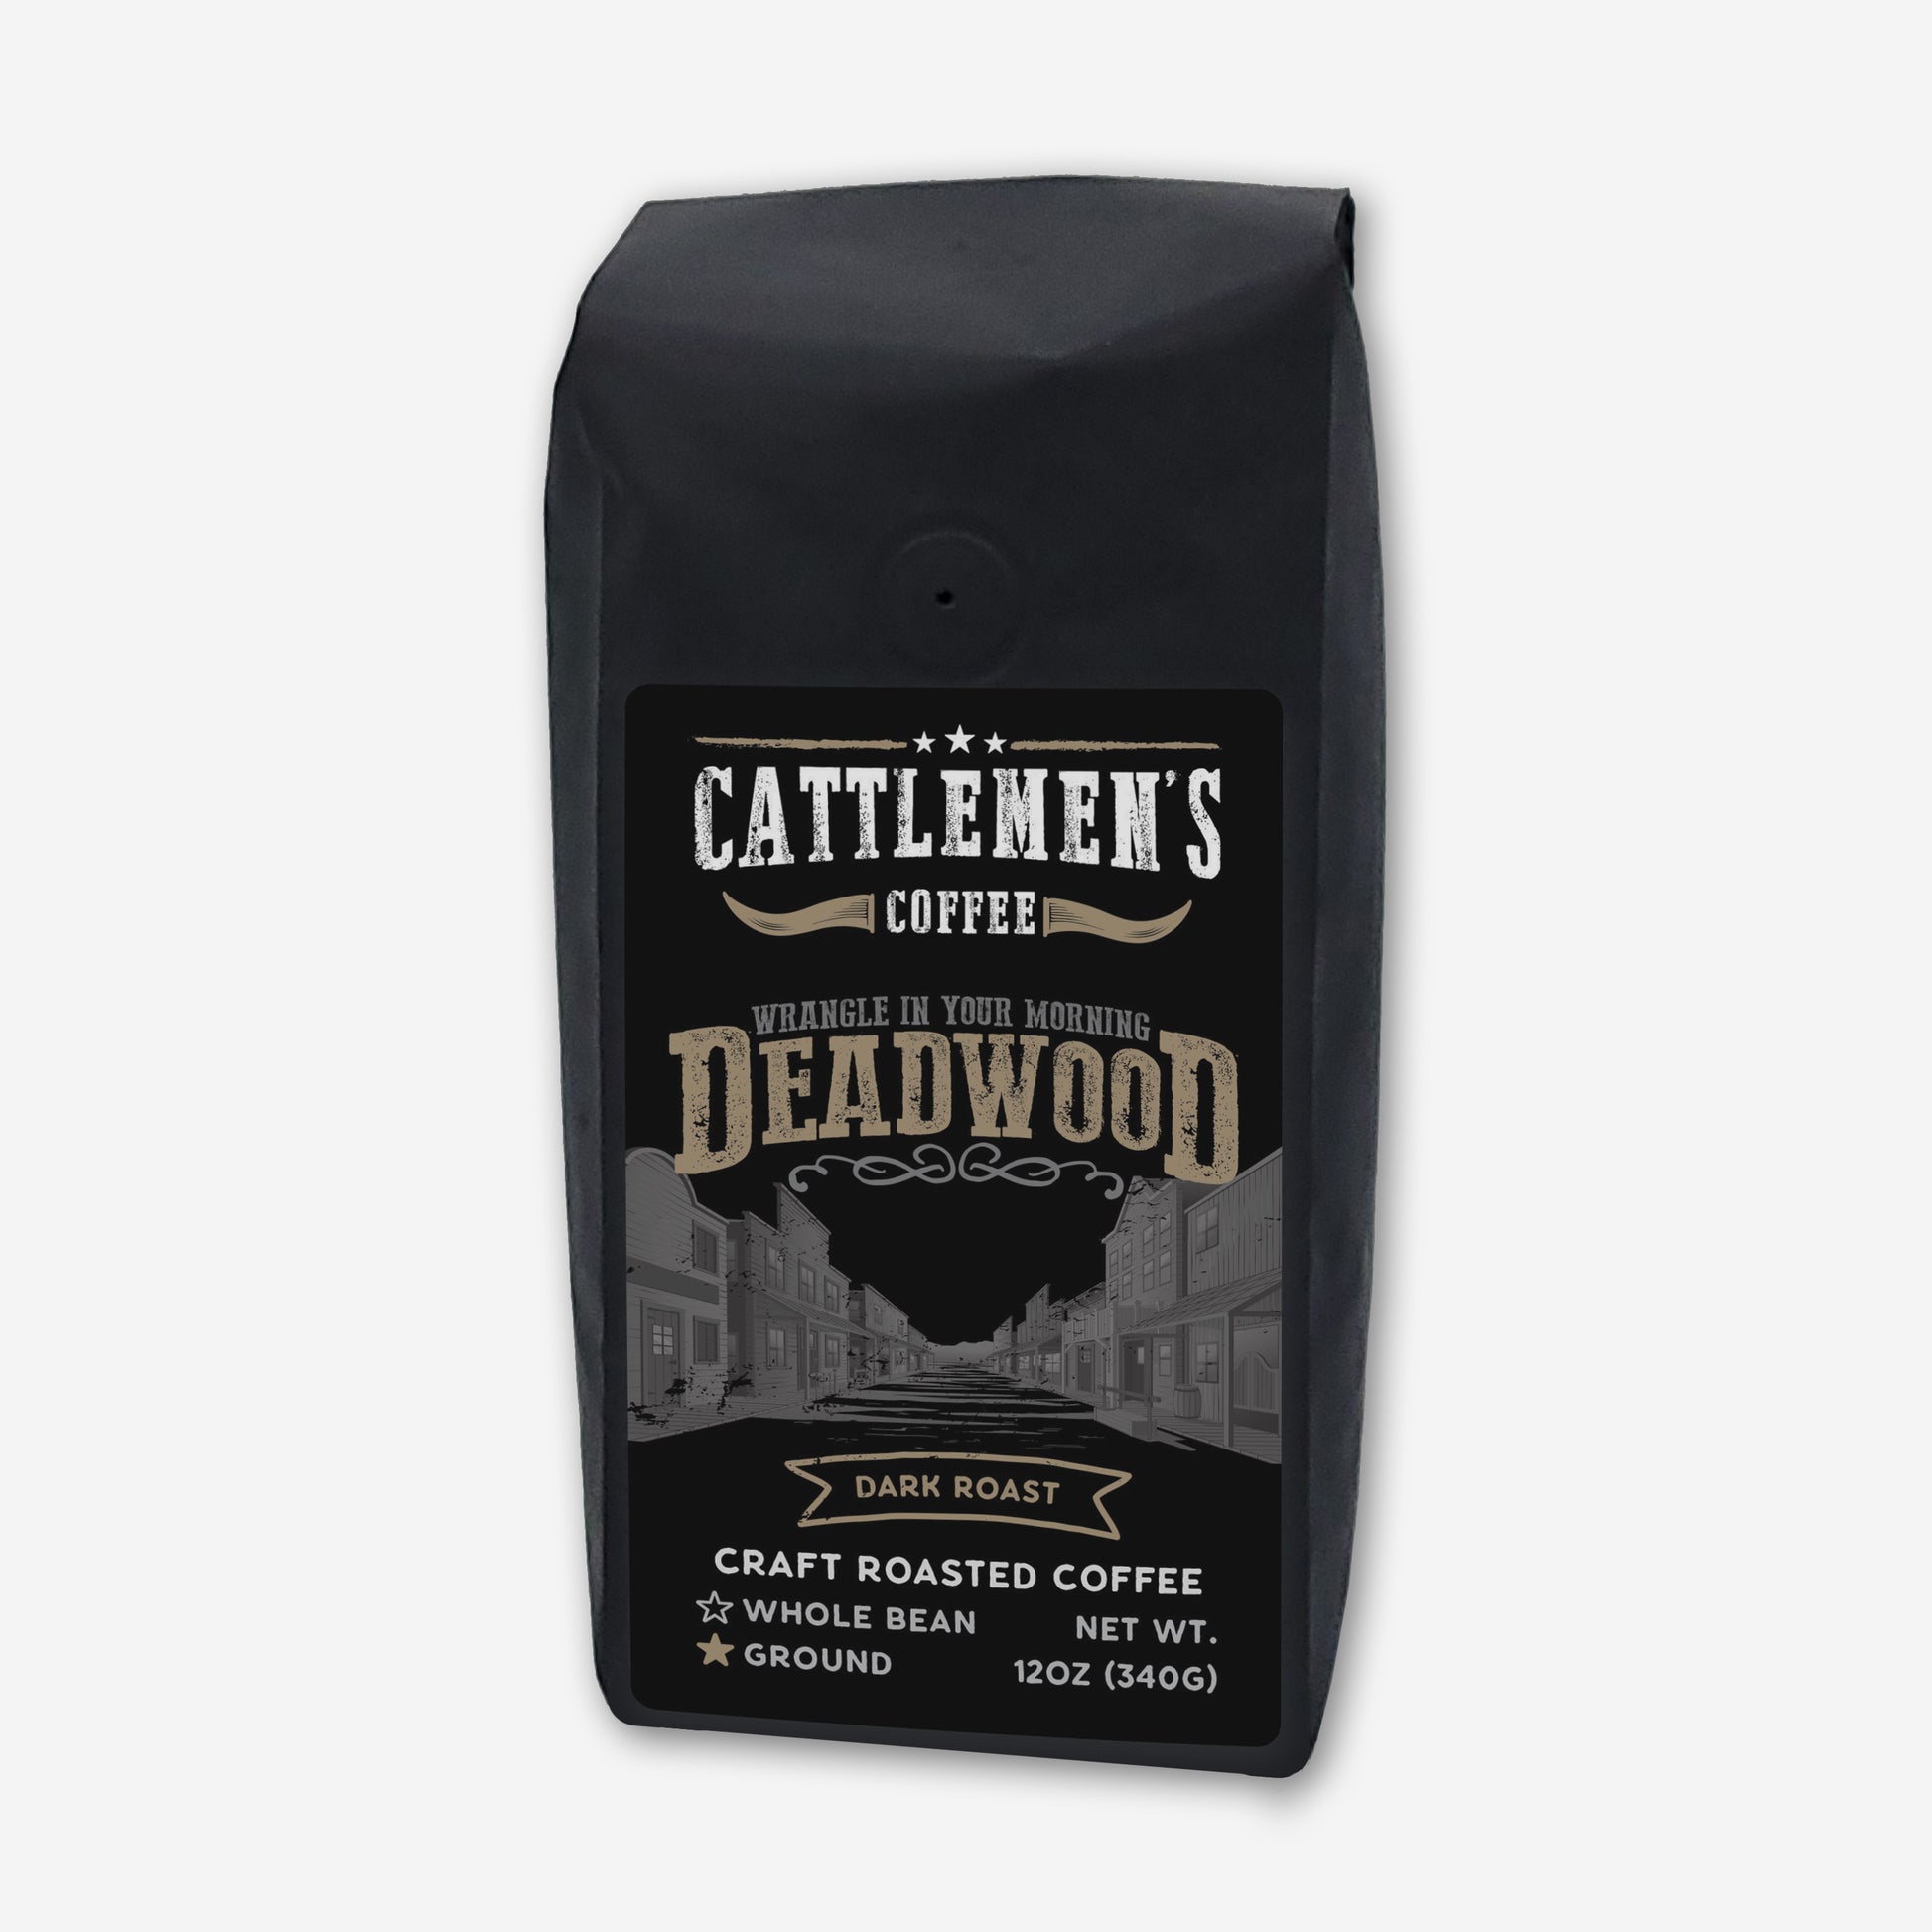 Deadwood Coffee Ground